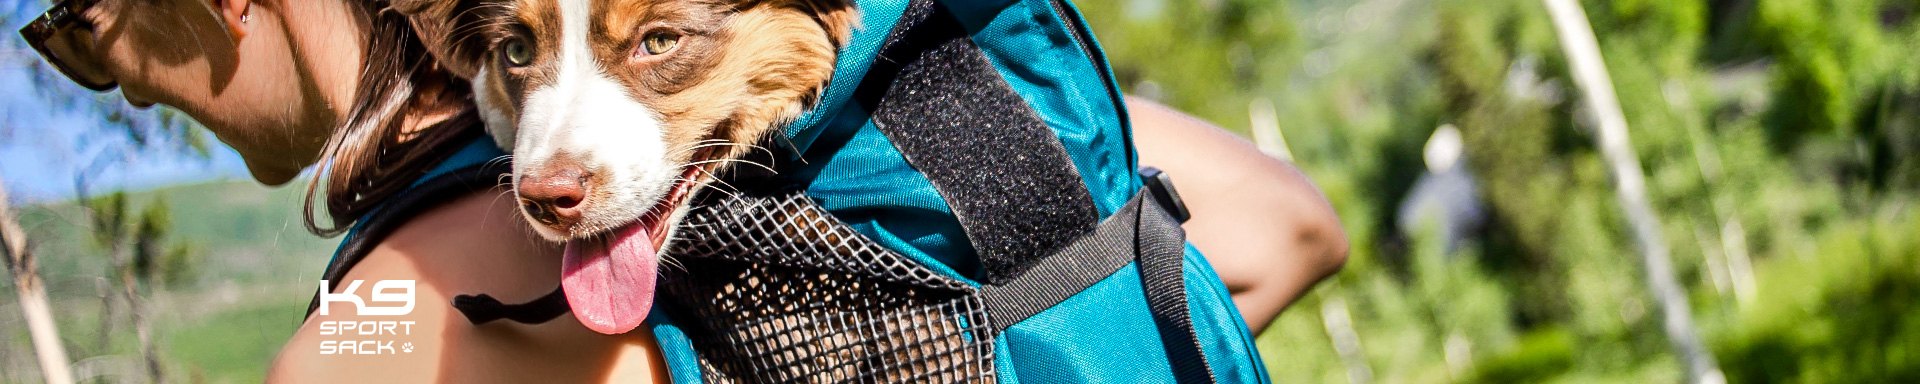 K9 Sport Sack Pet Carriers & Strollers